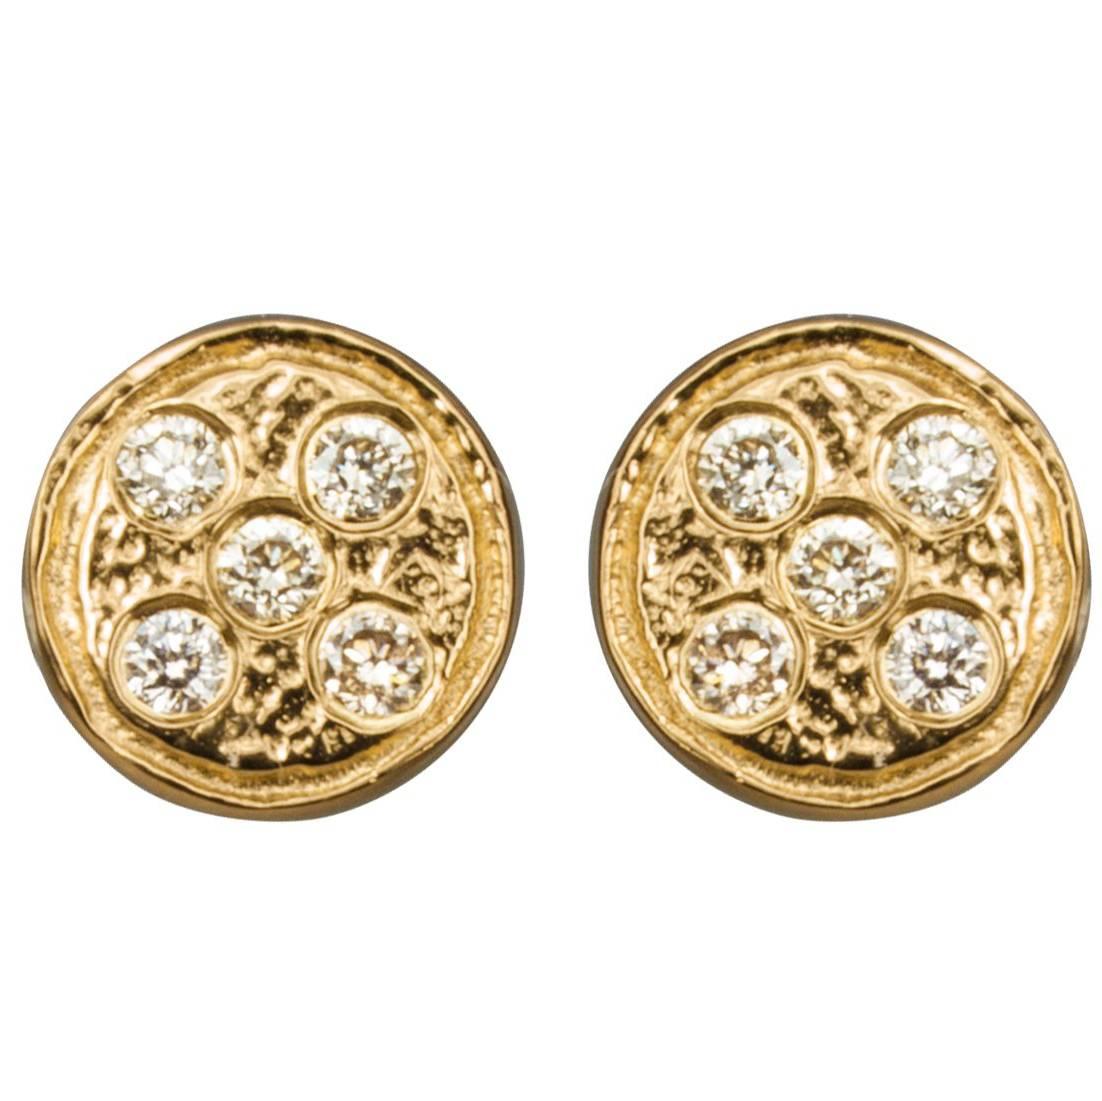 Ltd Edition 'Diamonds on a Flat Planet' Gold Plated Ear studs Earrings. 